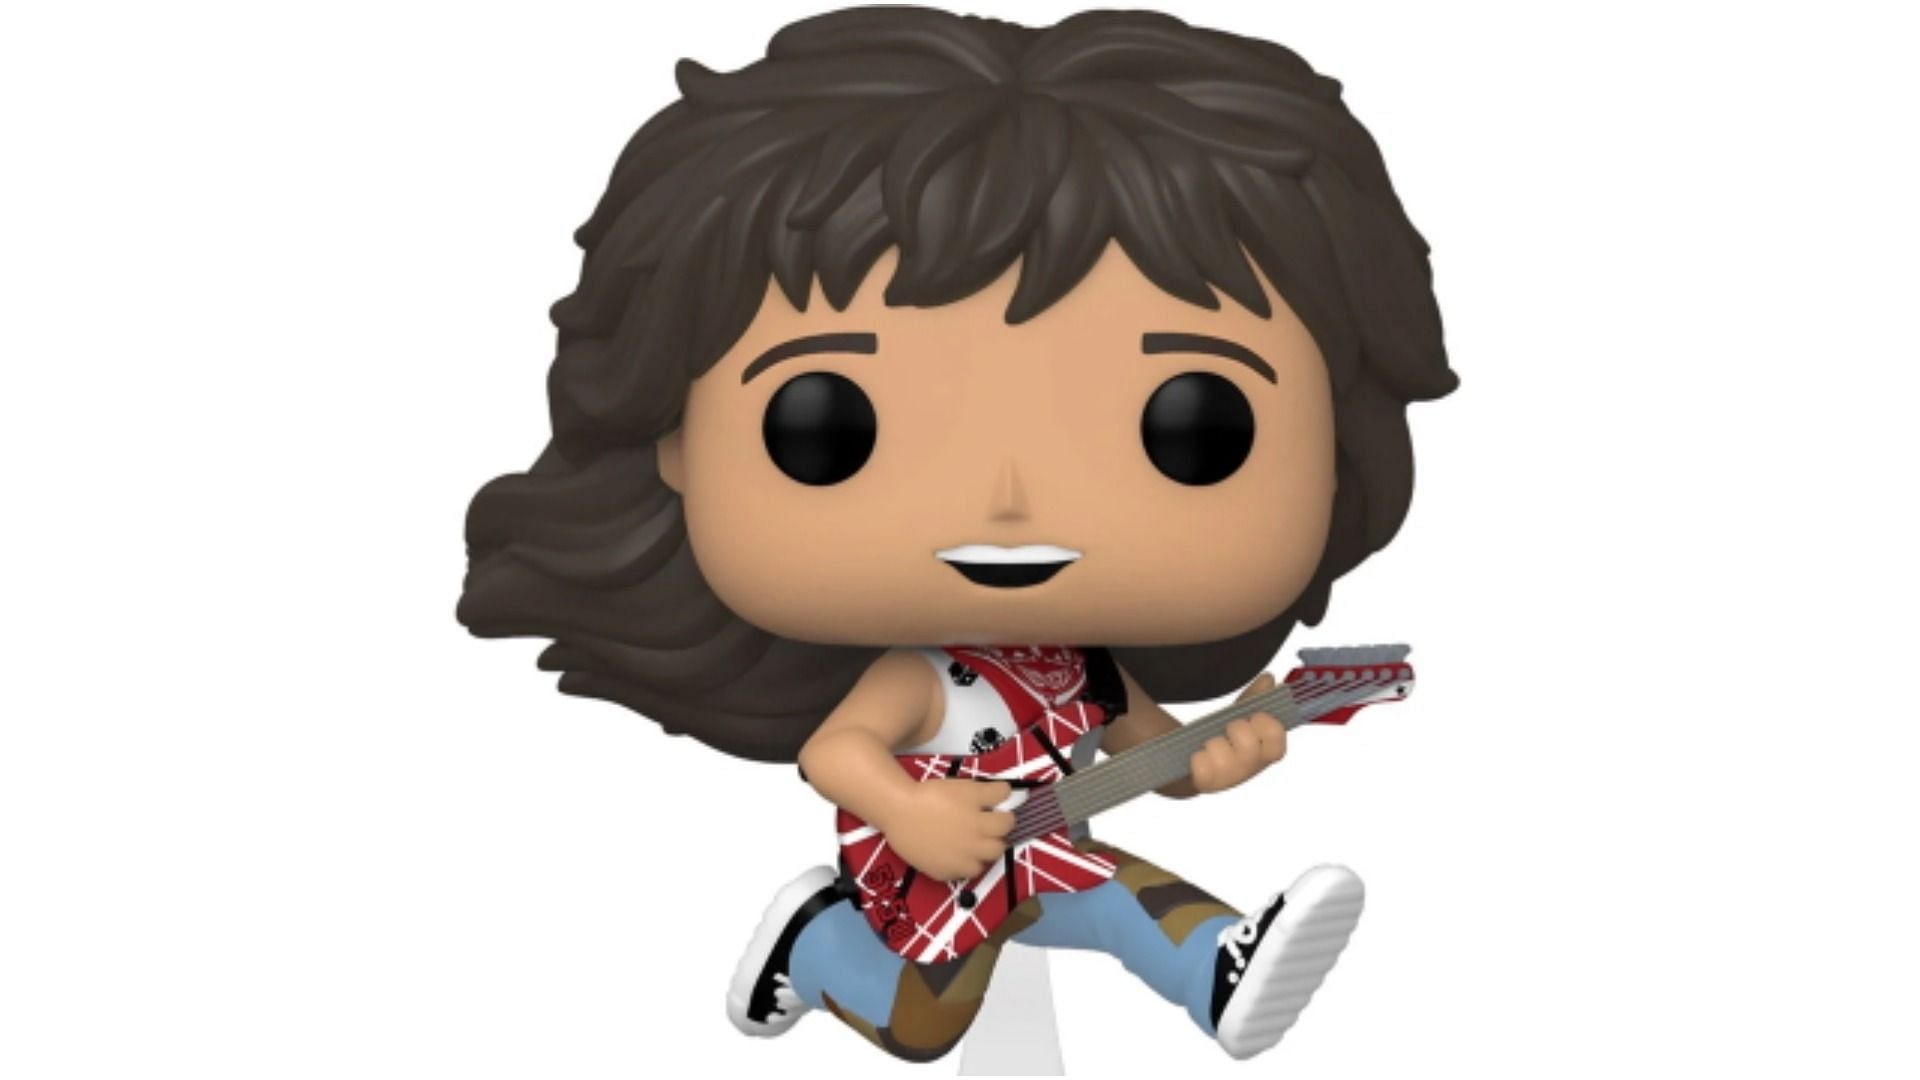 Eddie Van Halen Funko Pop is now available for pre-order (Image via argonevents/Twitter)